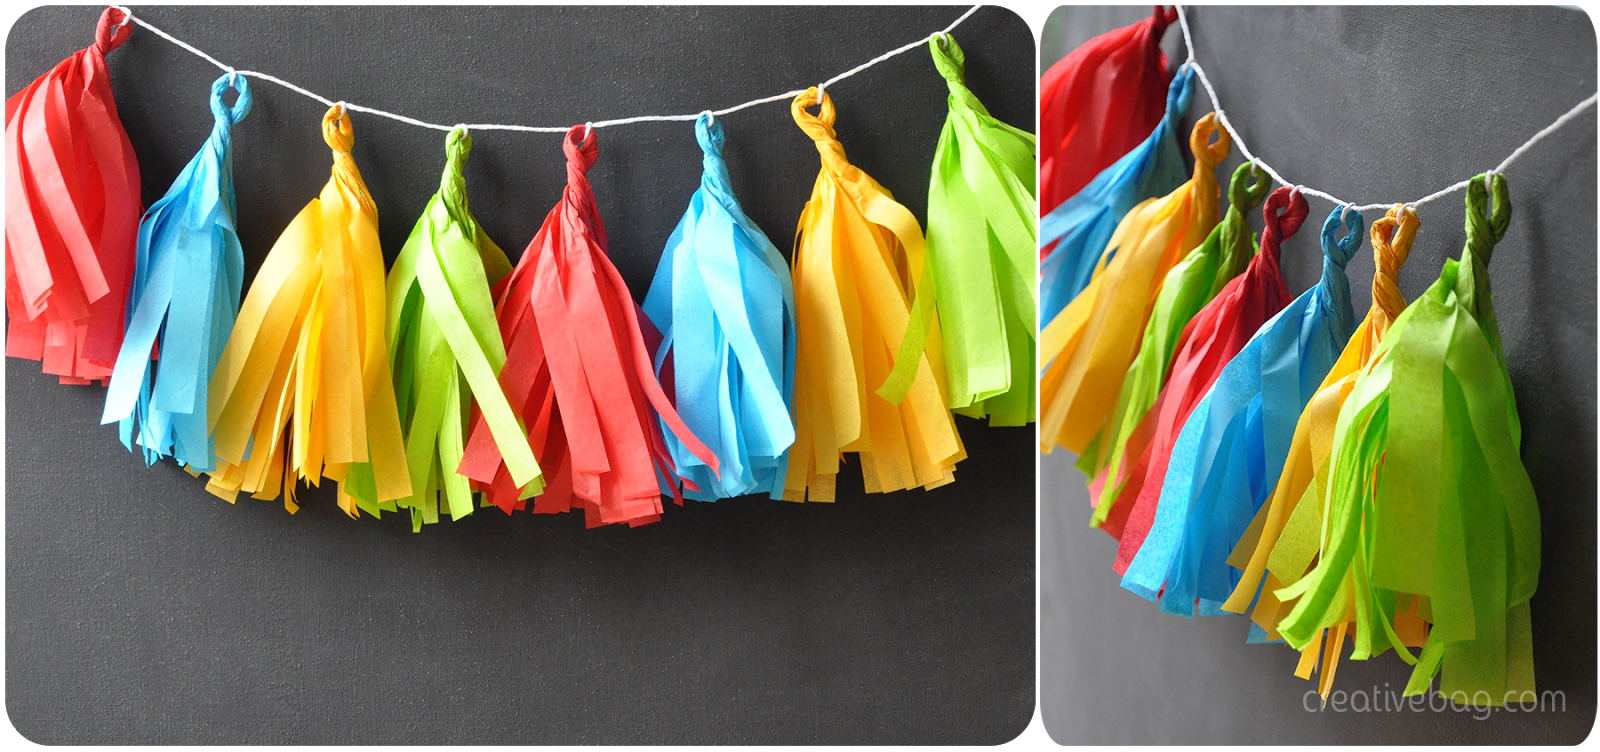 diy tissue paper tassel garland colour inspiration | by Lorrie Everitt for CreativeBag.com